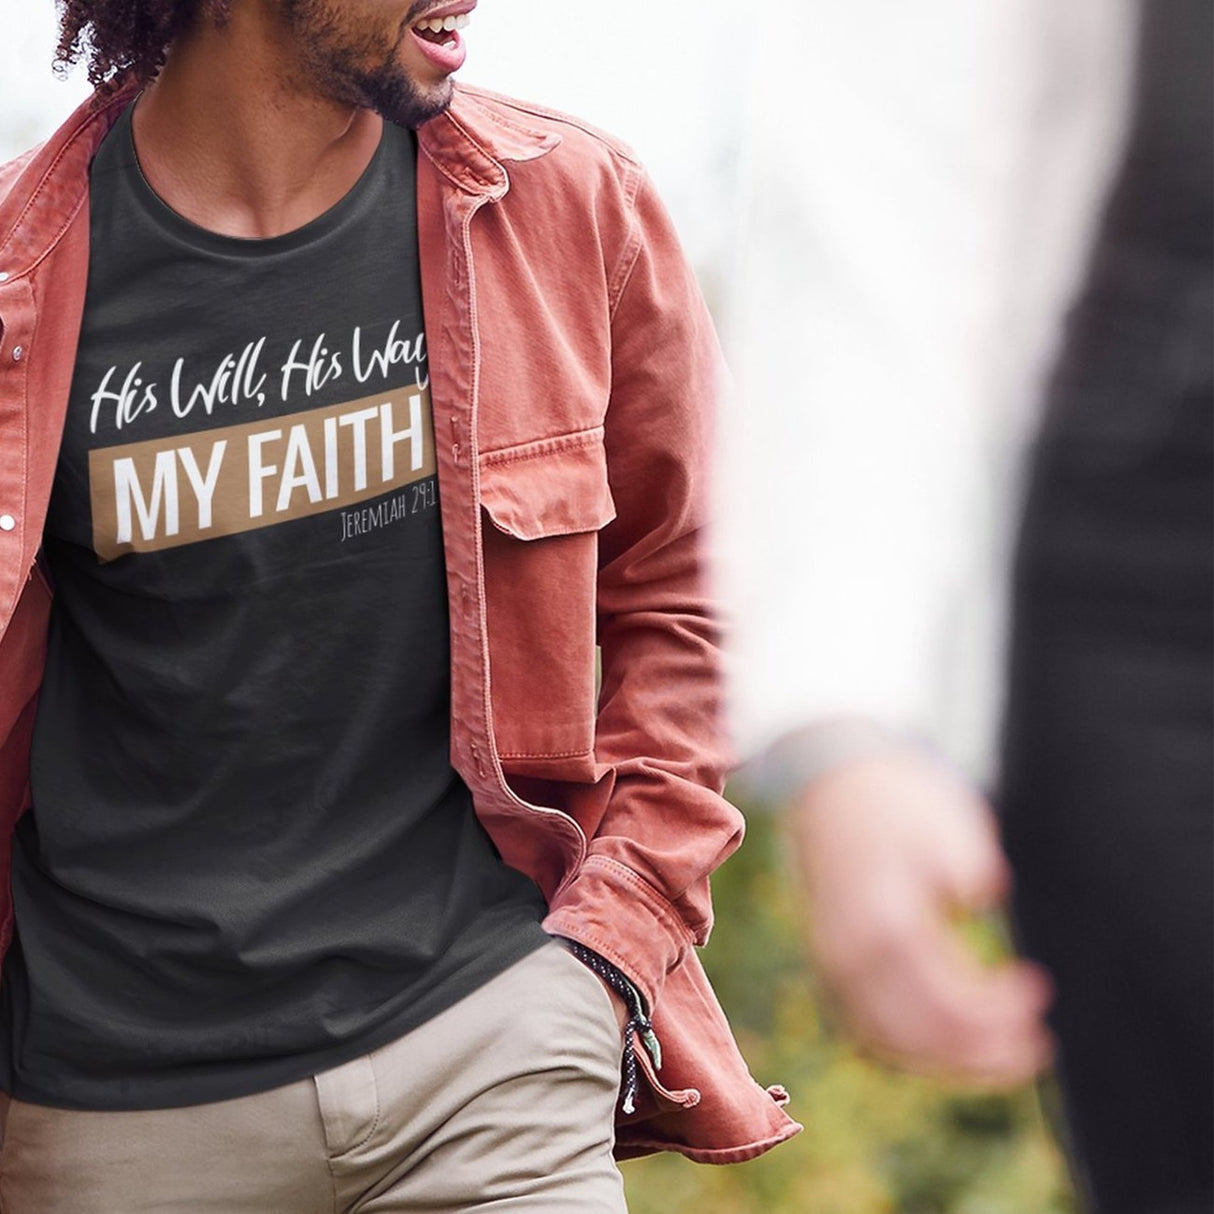 his-will-his-way-my-faith-jeremiah-29-11-christian-tee-jesus-t-shirt-faith-tee-religious-t-shirt-church-tee#color_black